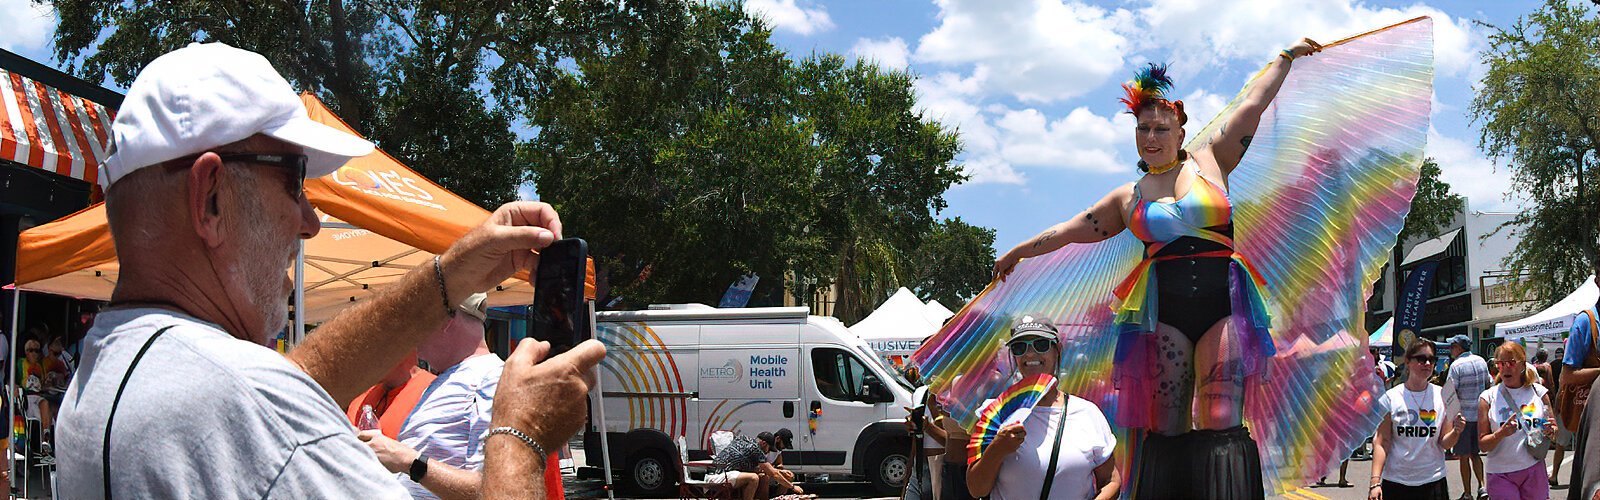 Stilt-walker Maggie Soluna serves as a memorable backdrop for a souvenir photo of St Pete Pride’s street festival.